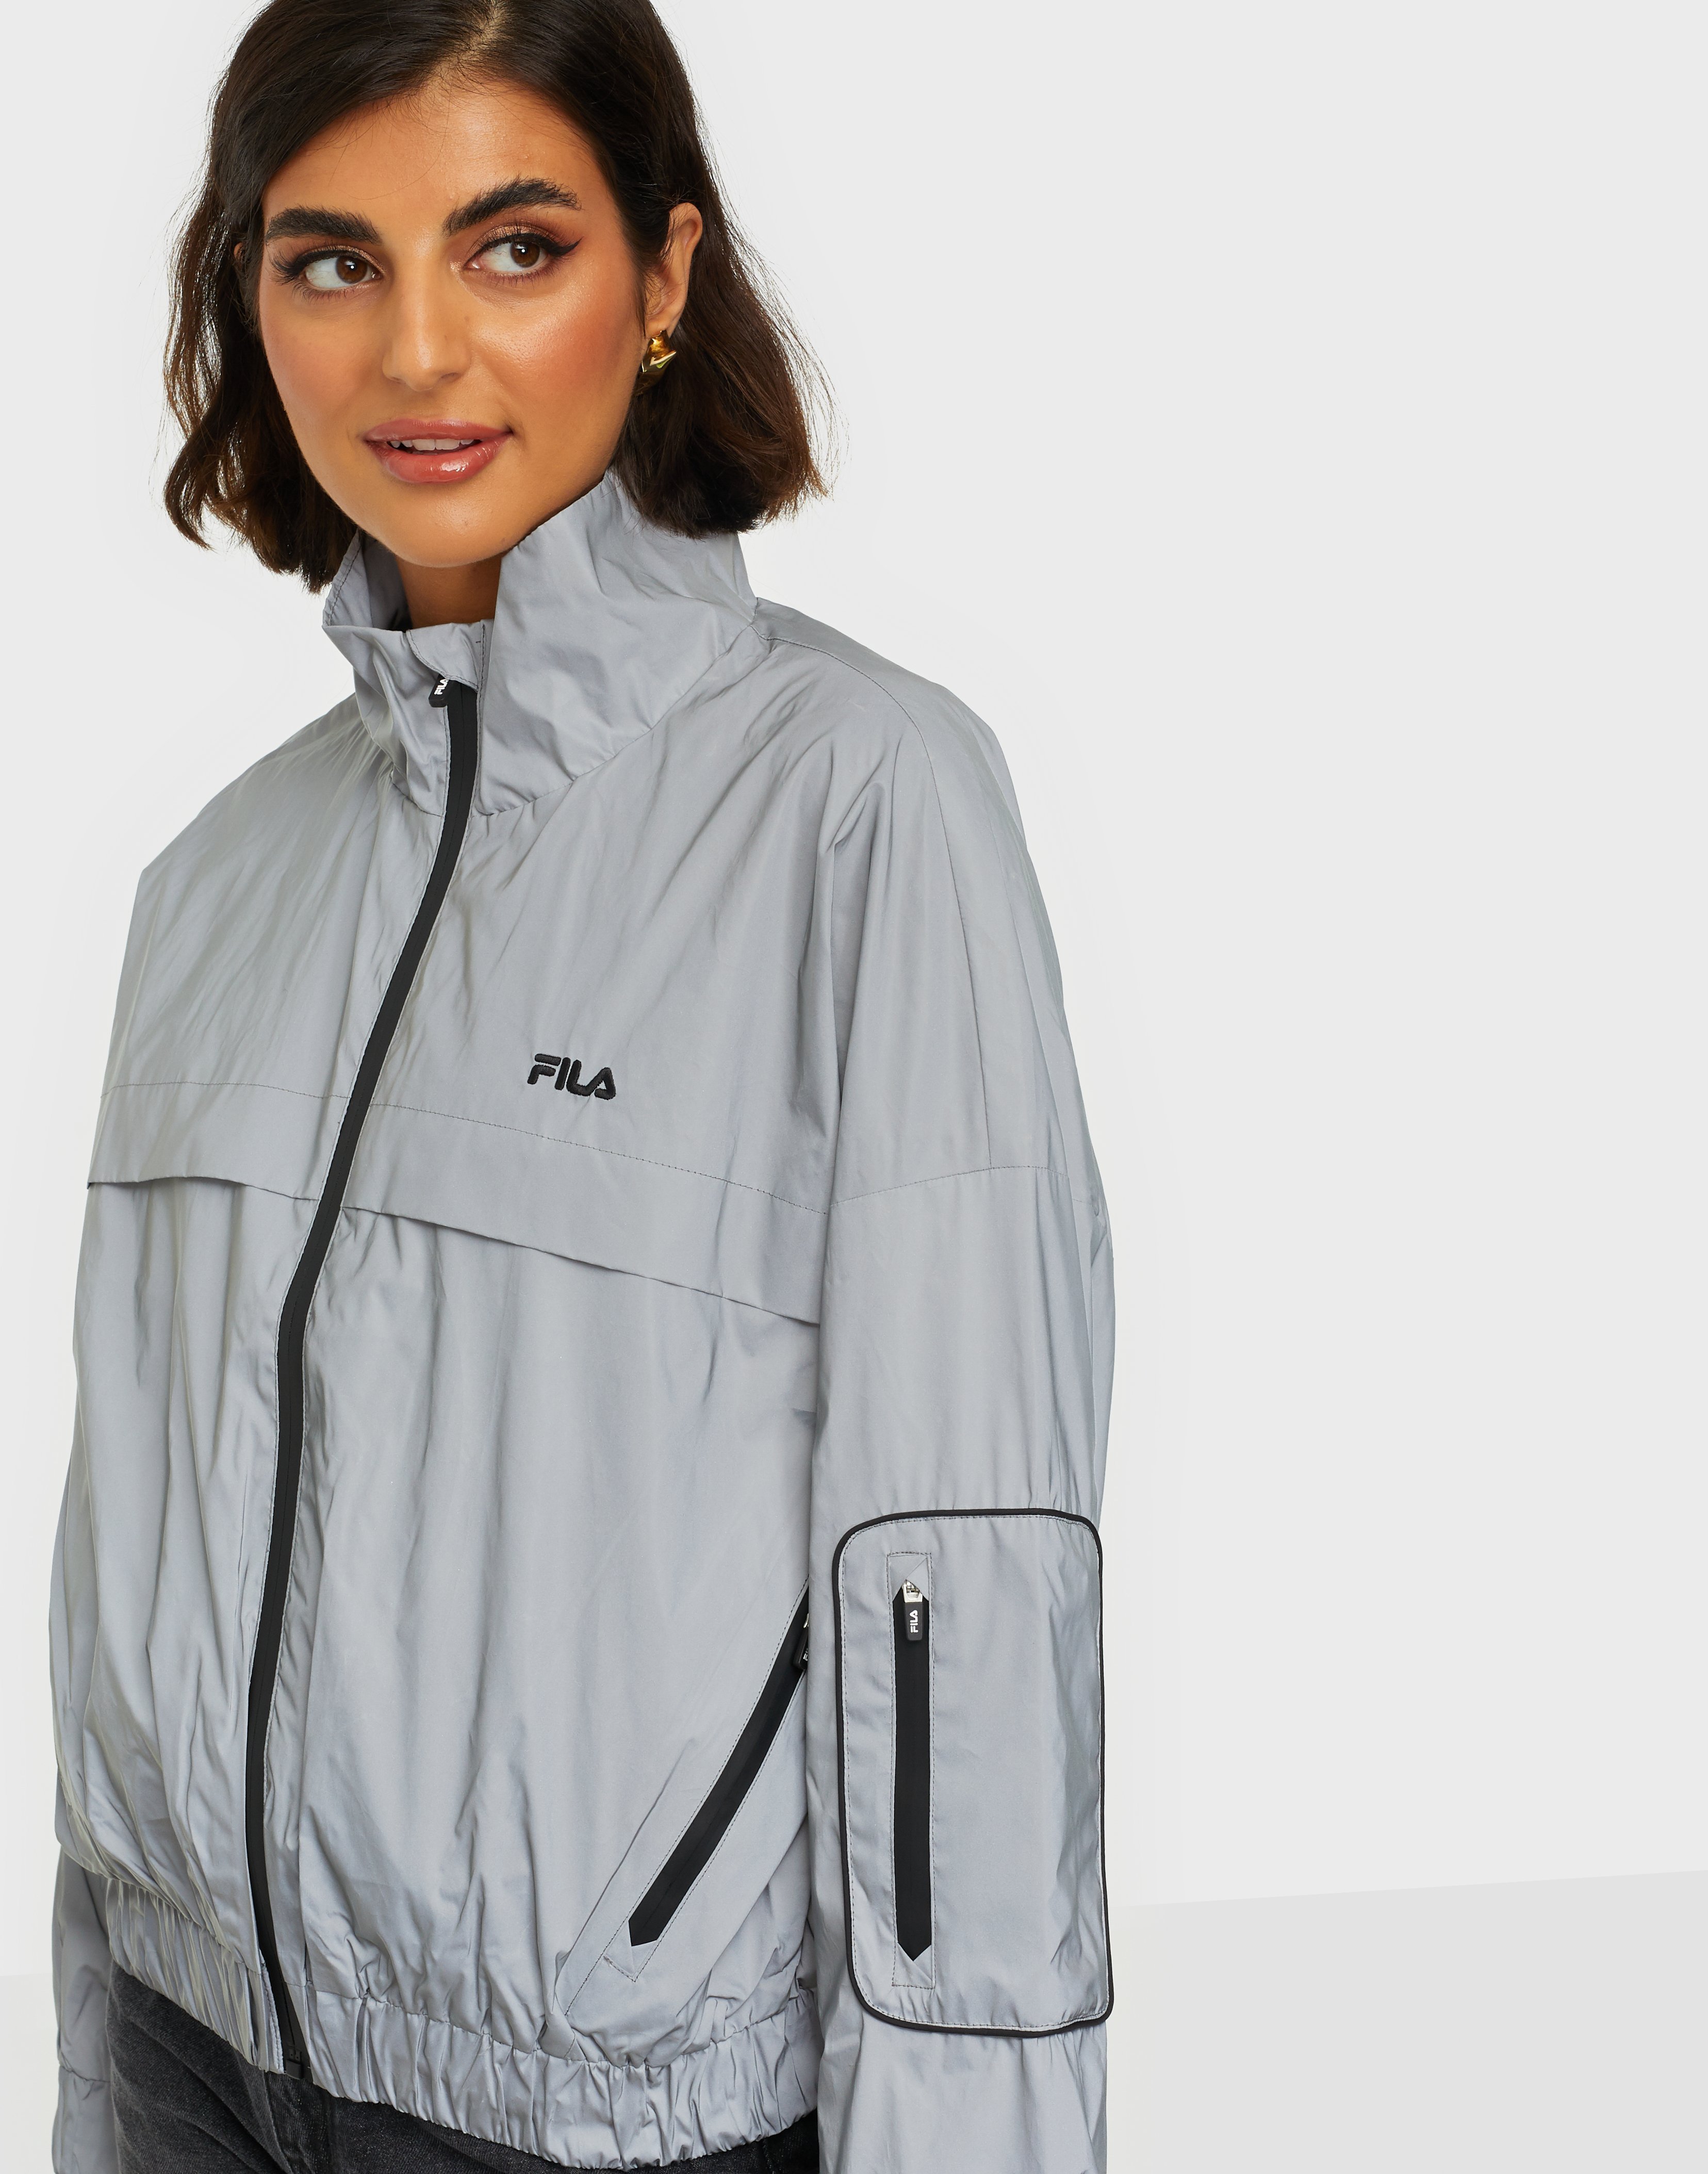 fila reflective jacket womens